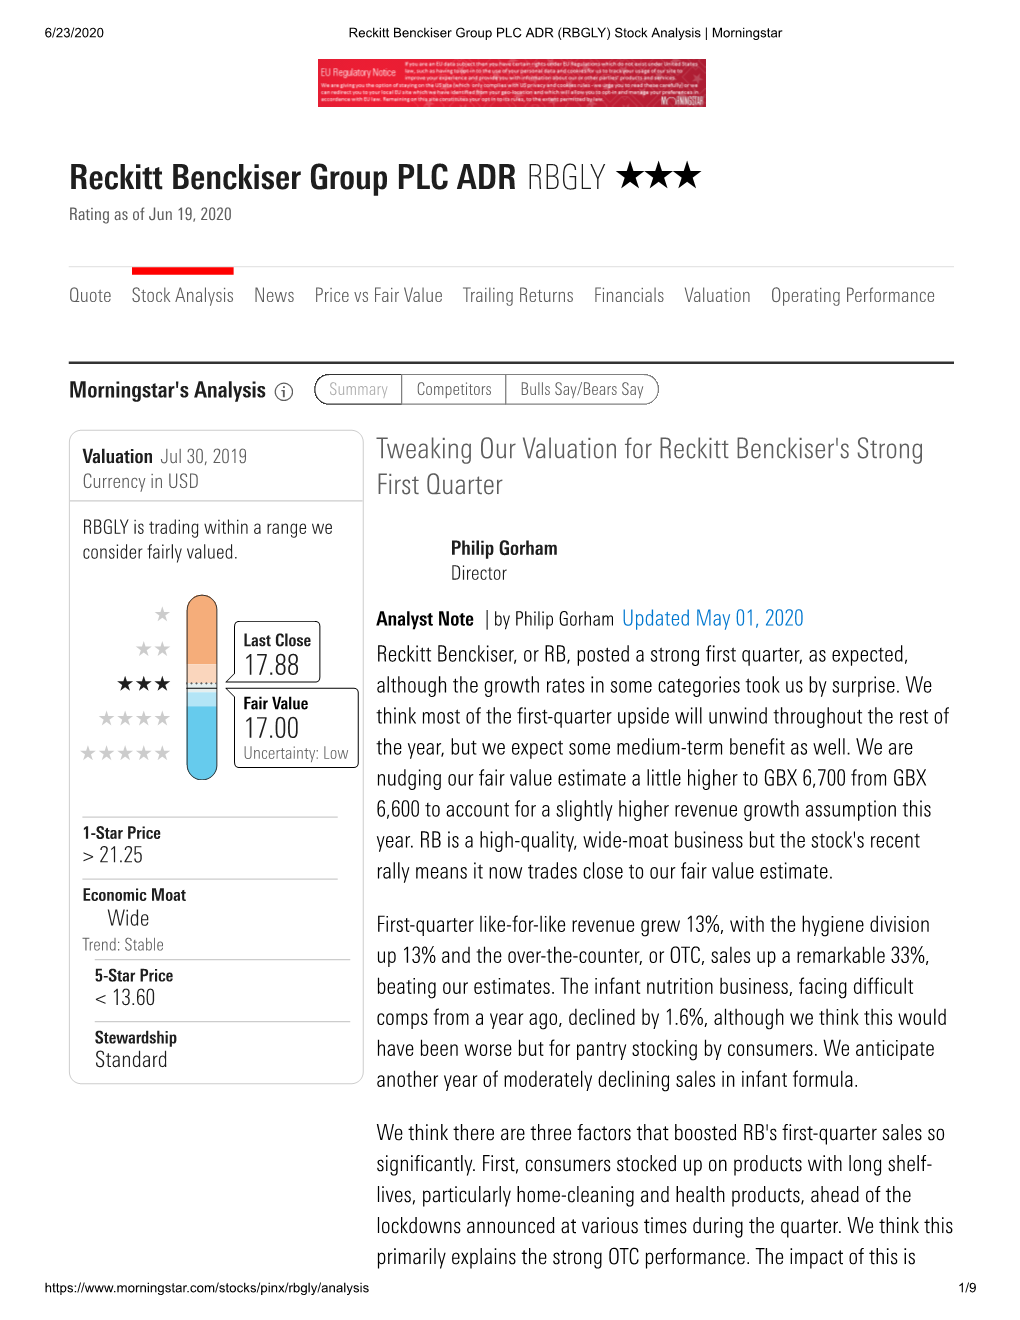 Reckitt Benckiser Group PLC ADR RBGLY Rating As of Jun 19, 2020